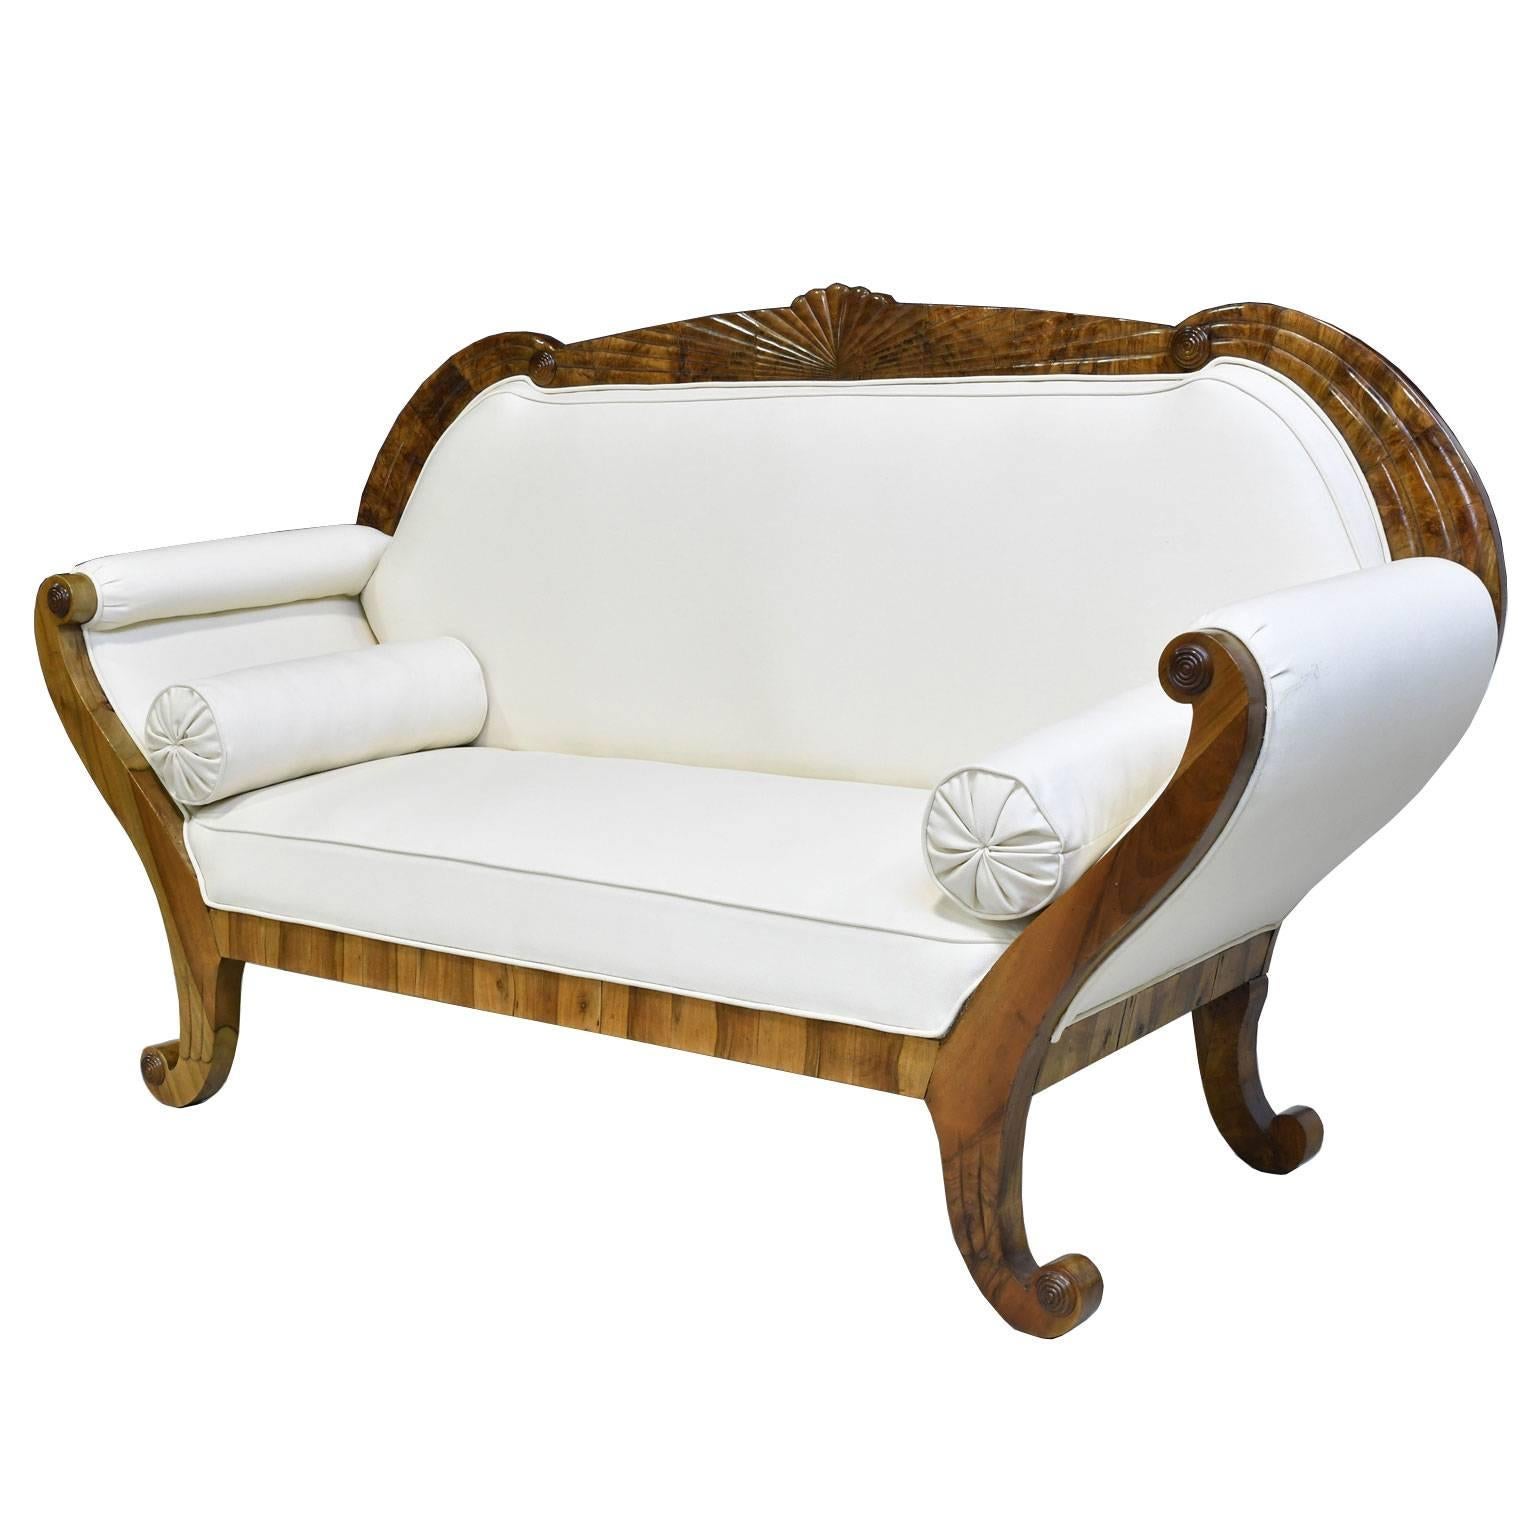 Polished South German Biedermeier Sofa in Walnut with Fan-Carved Crest, circa 1830 For Sale